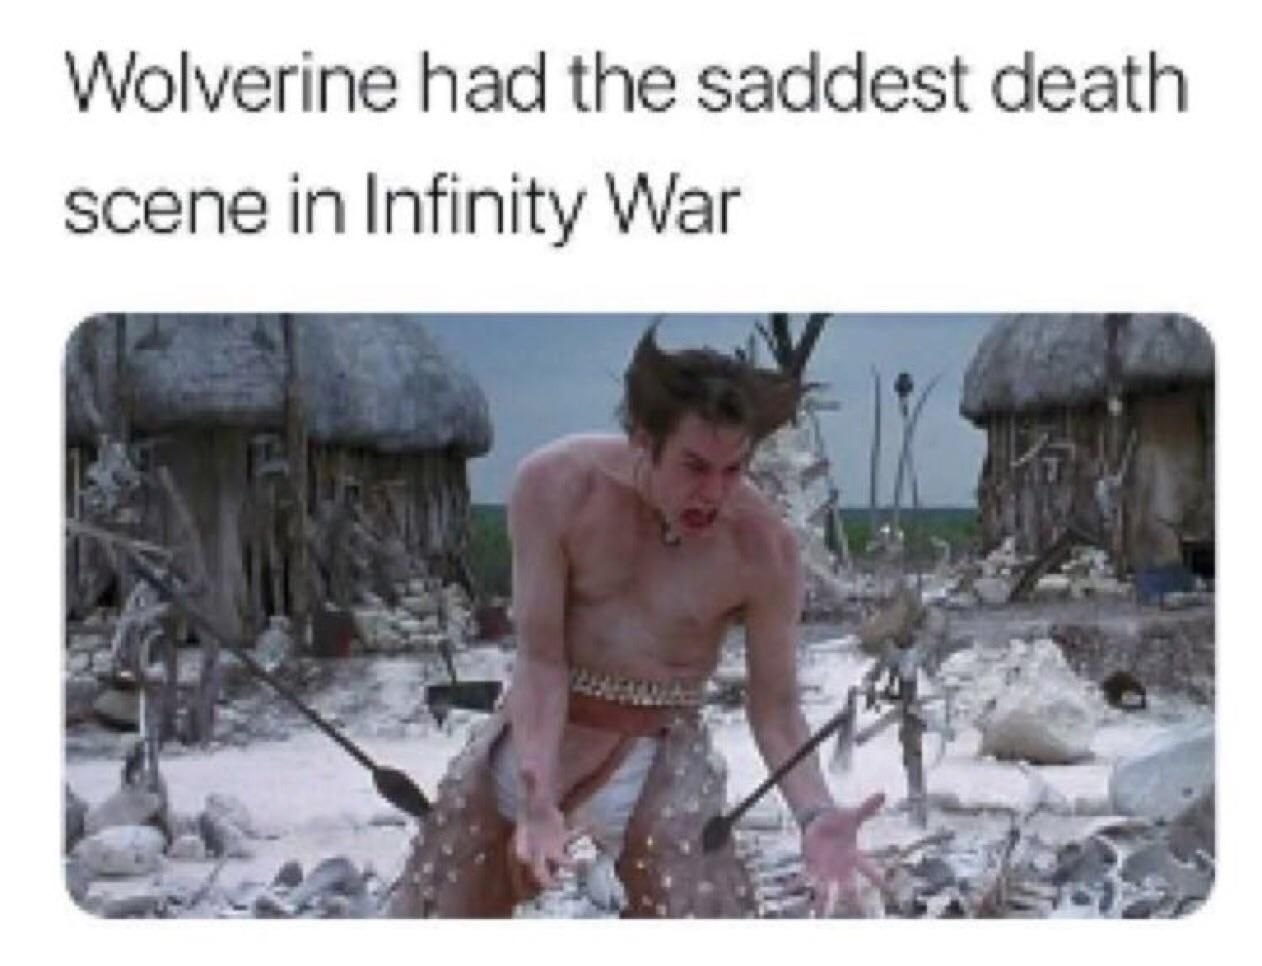 Sad to see Wolverine go